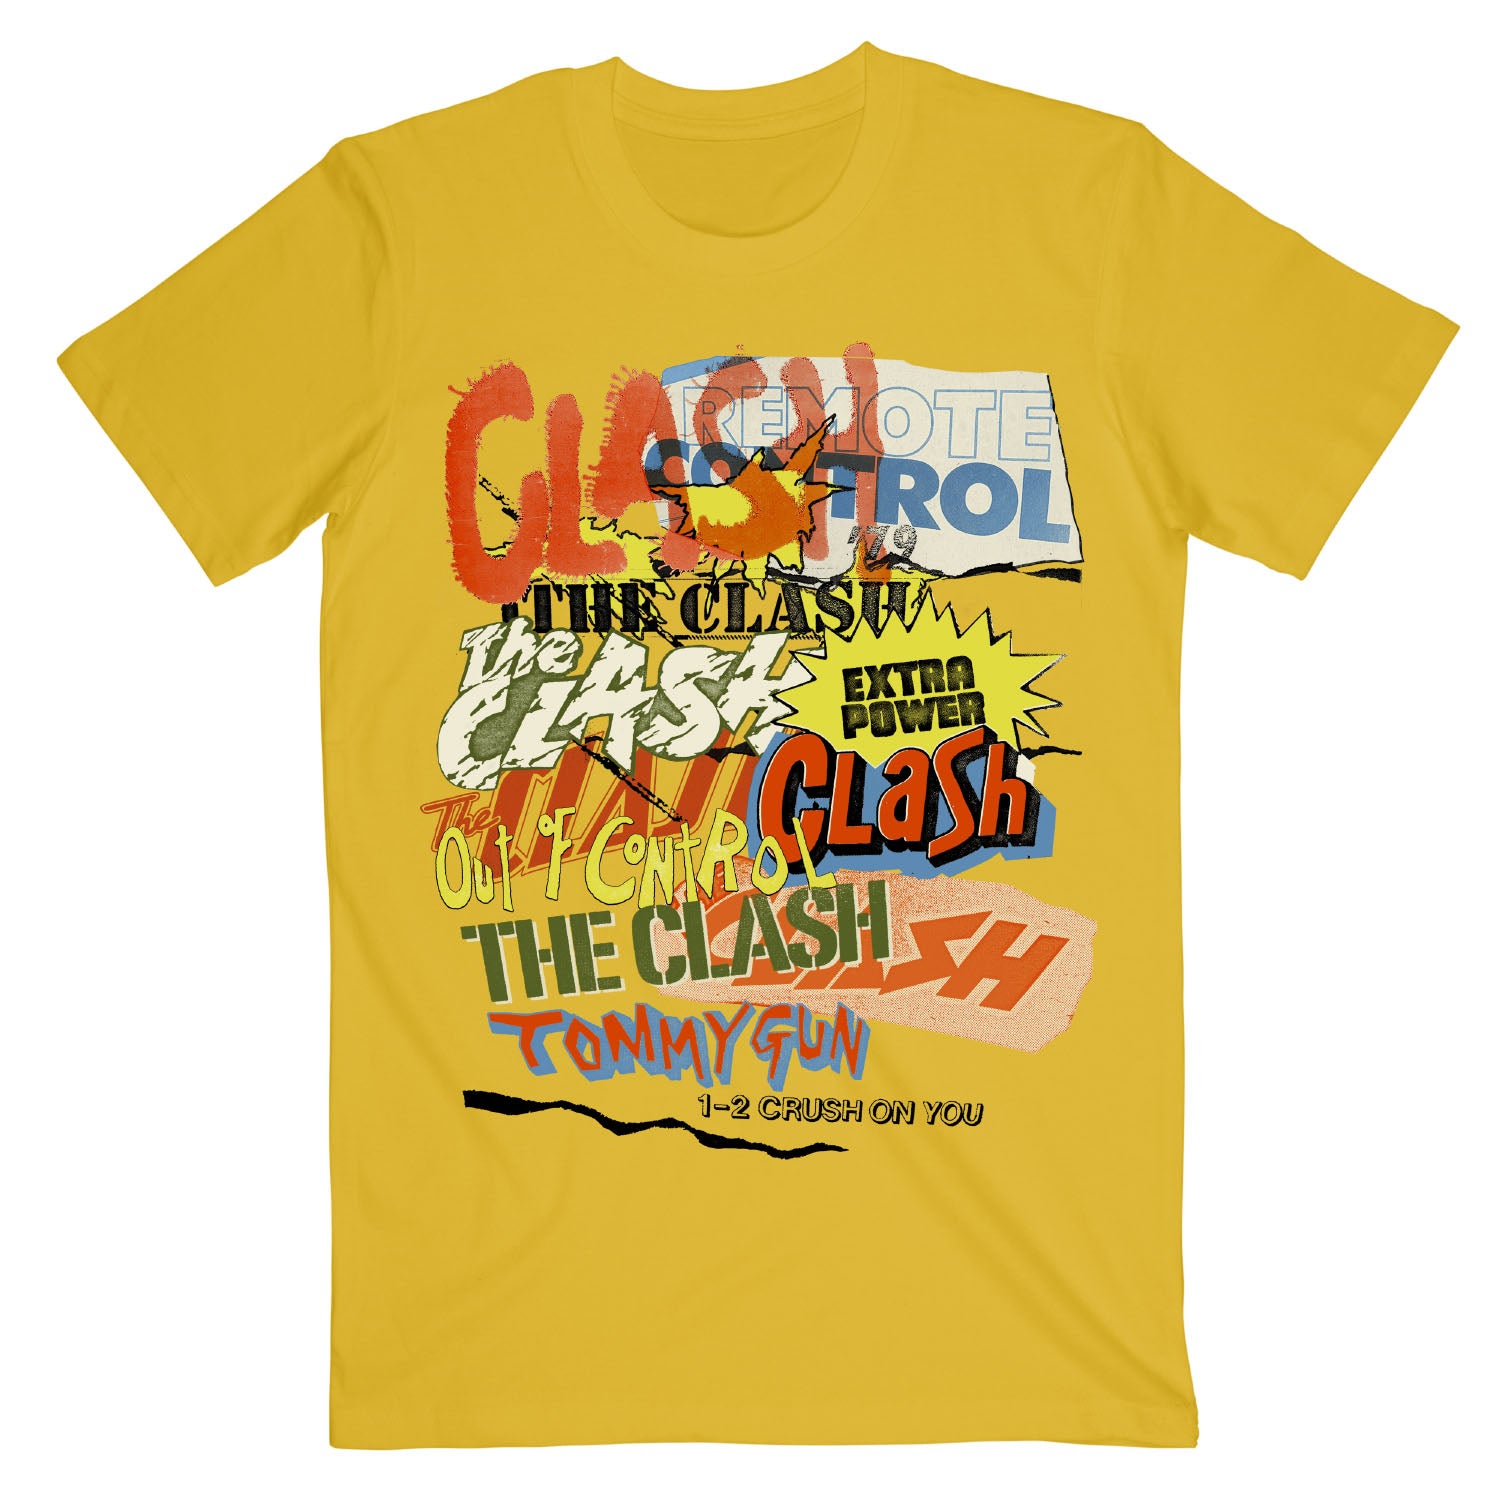 Black Market Clash - Singles Collage Gold T-shirt